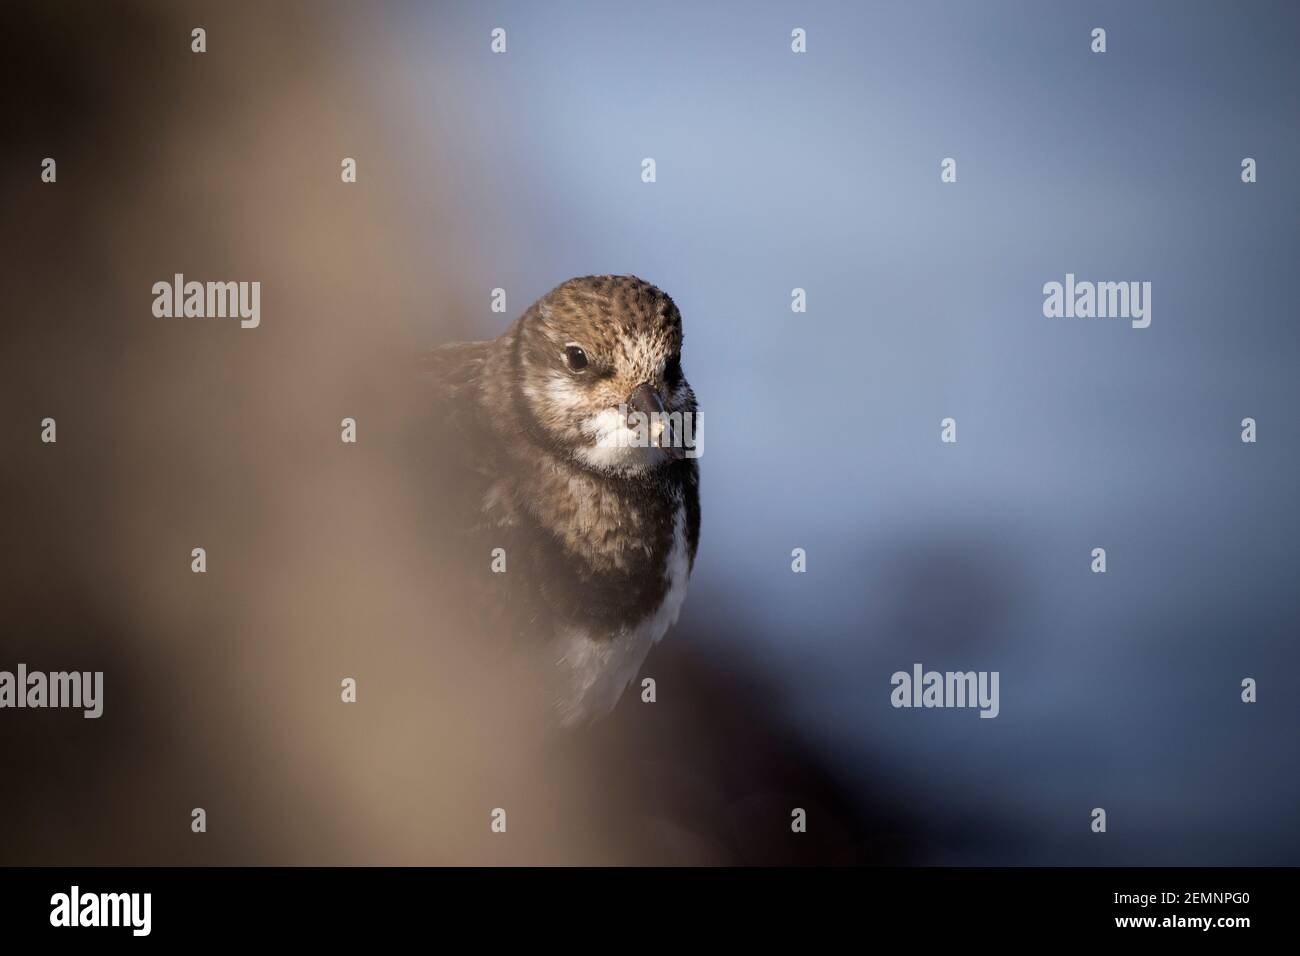 A turnstone bird peeking around a blurry rock with a blue background Stock Photo